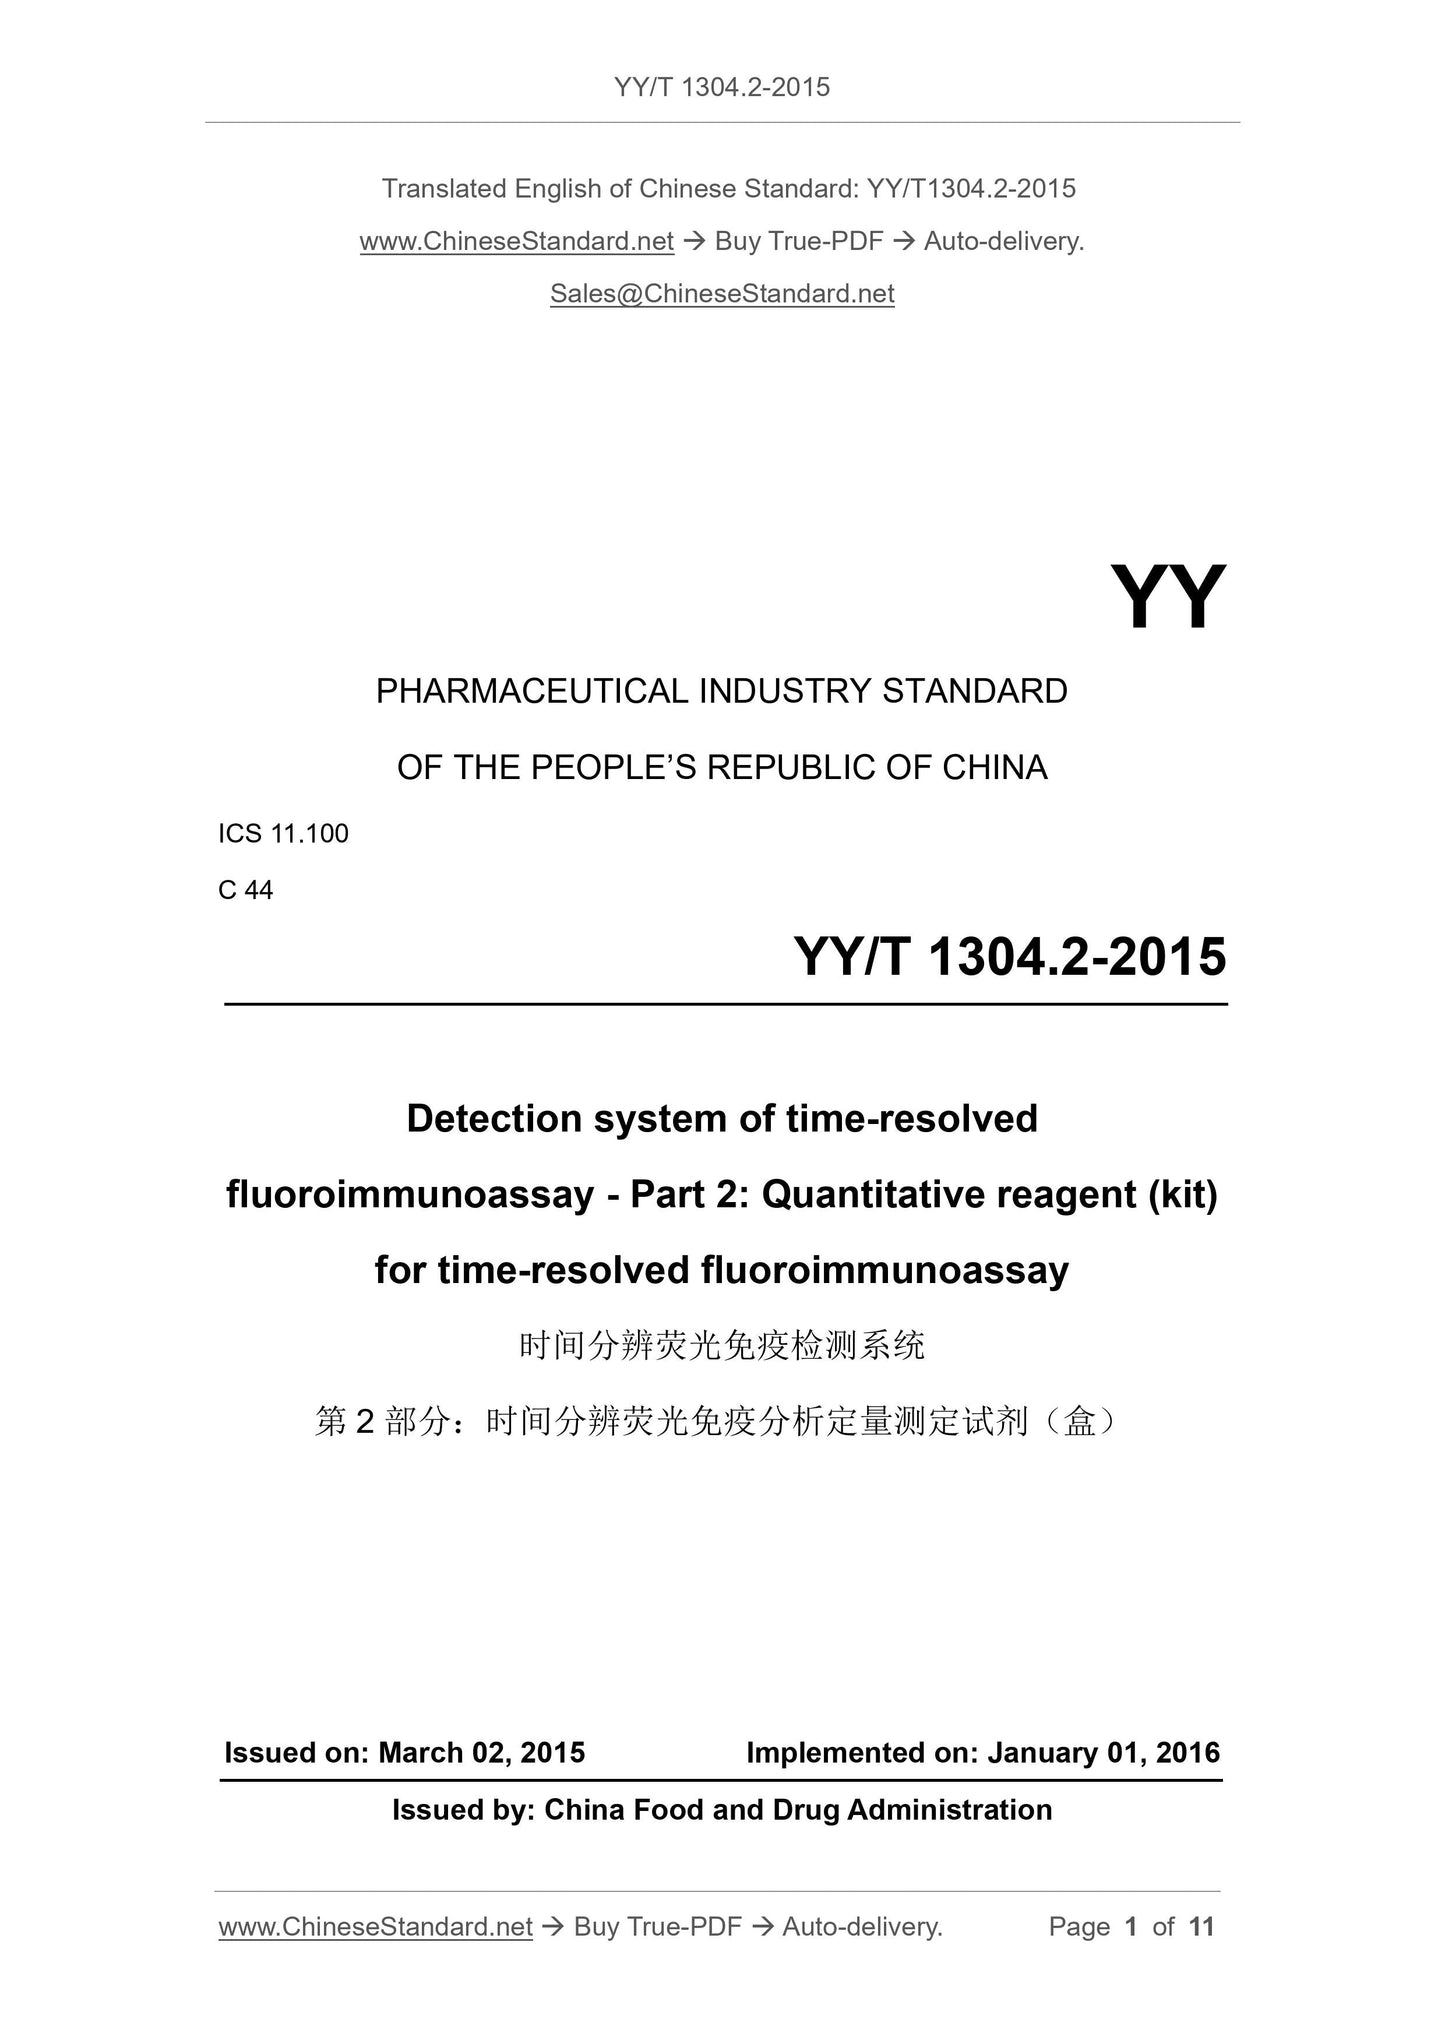 YY/T 1304.2-2015 Page 1